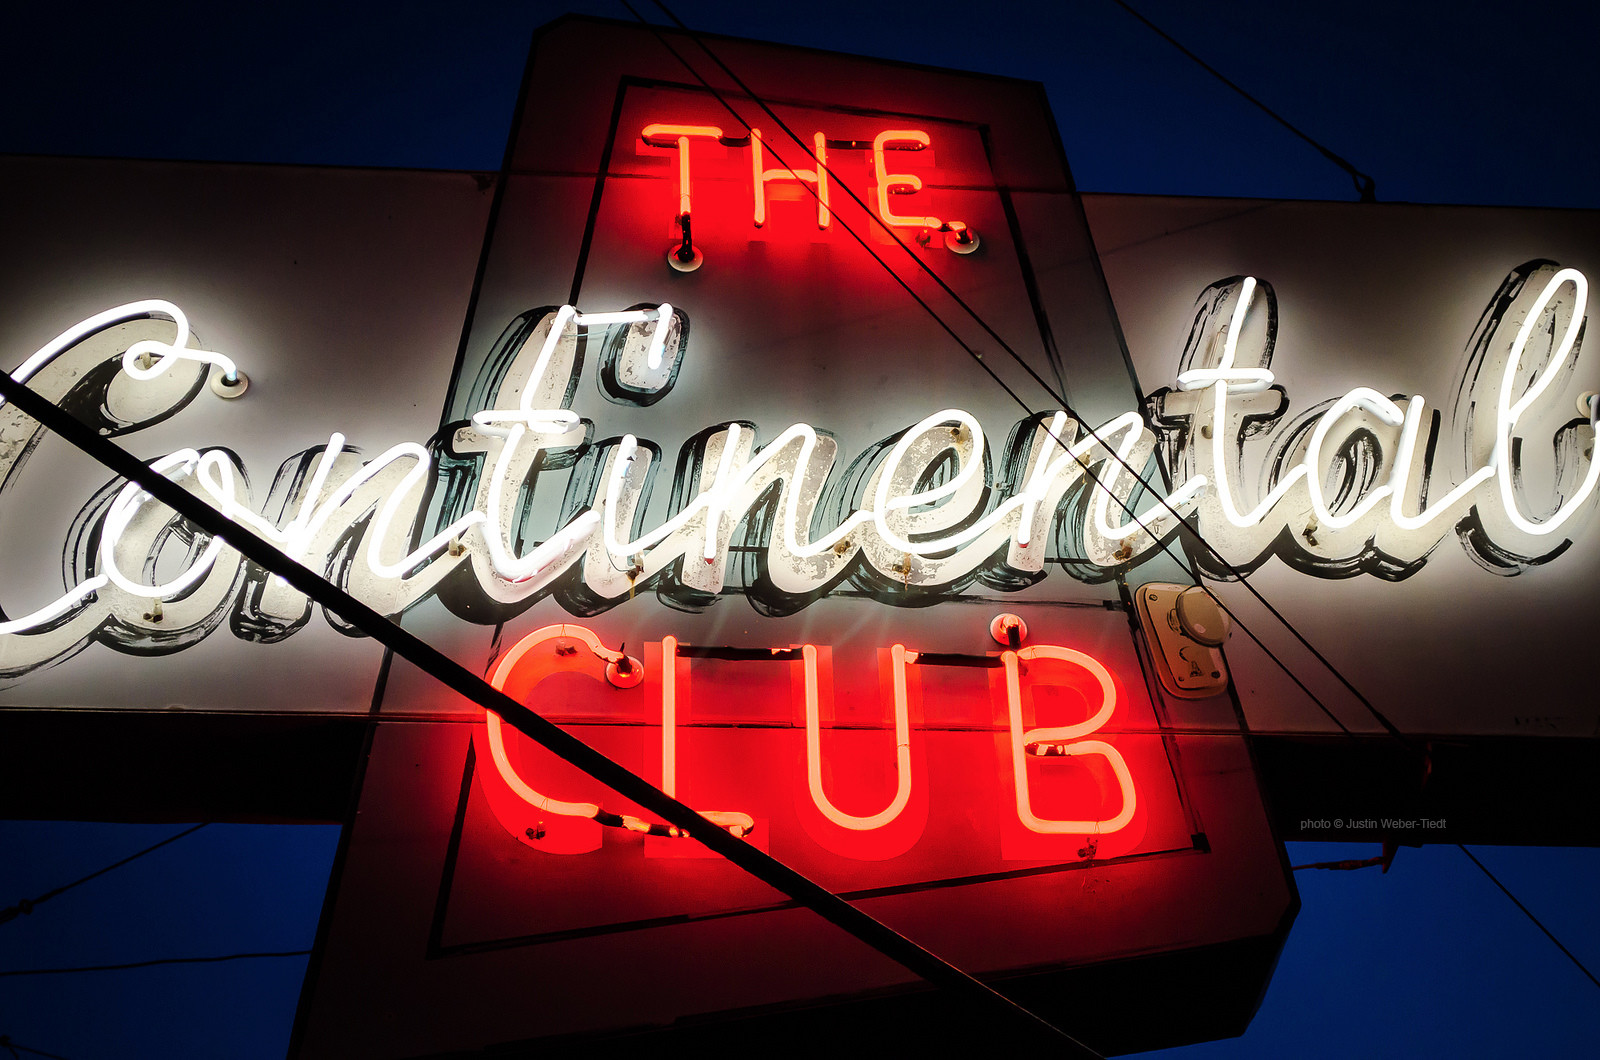 Continental Club Austin The Continental Club